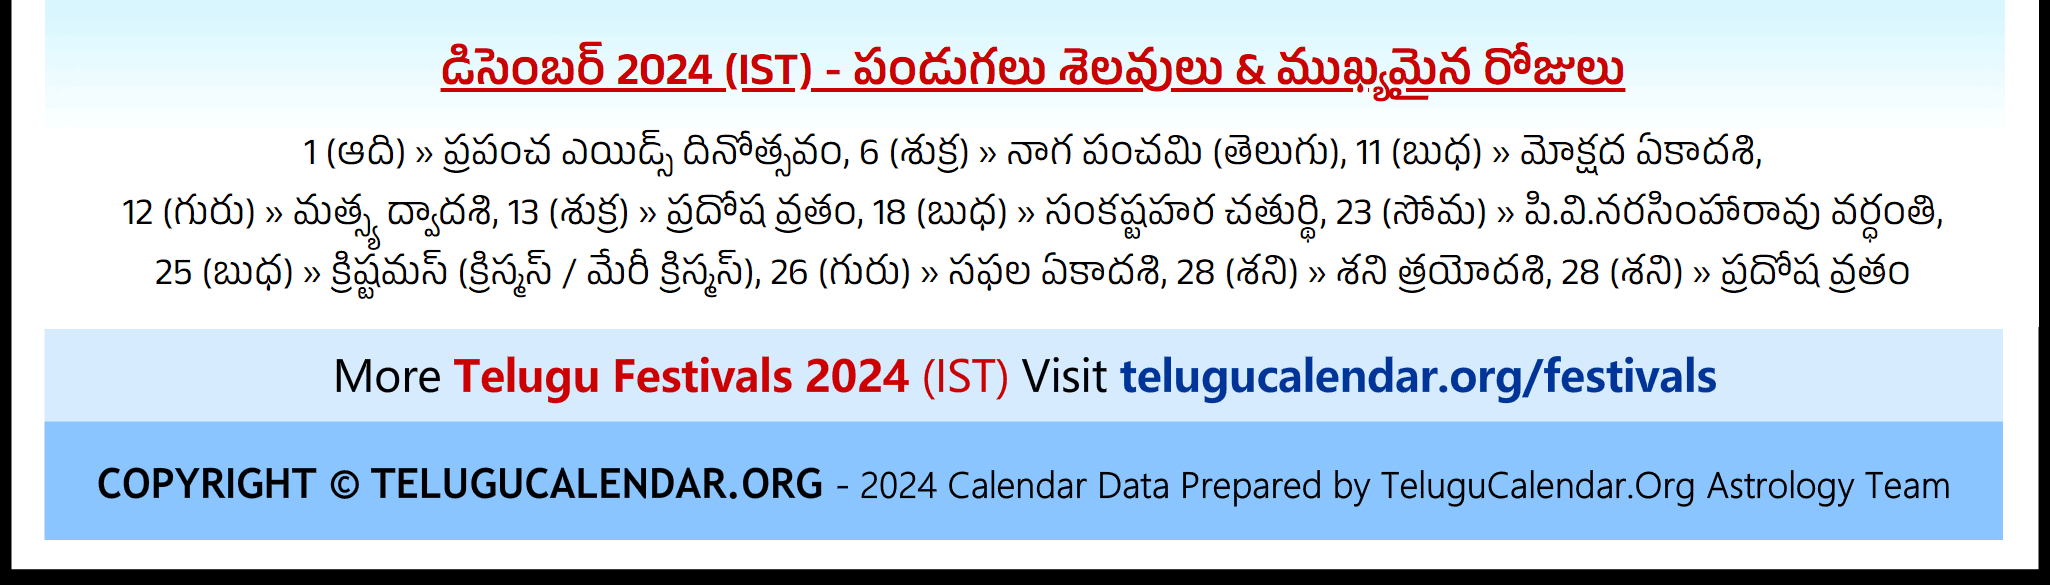 Telugu Festivals (IST) 2024 December